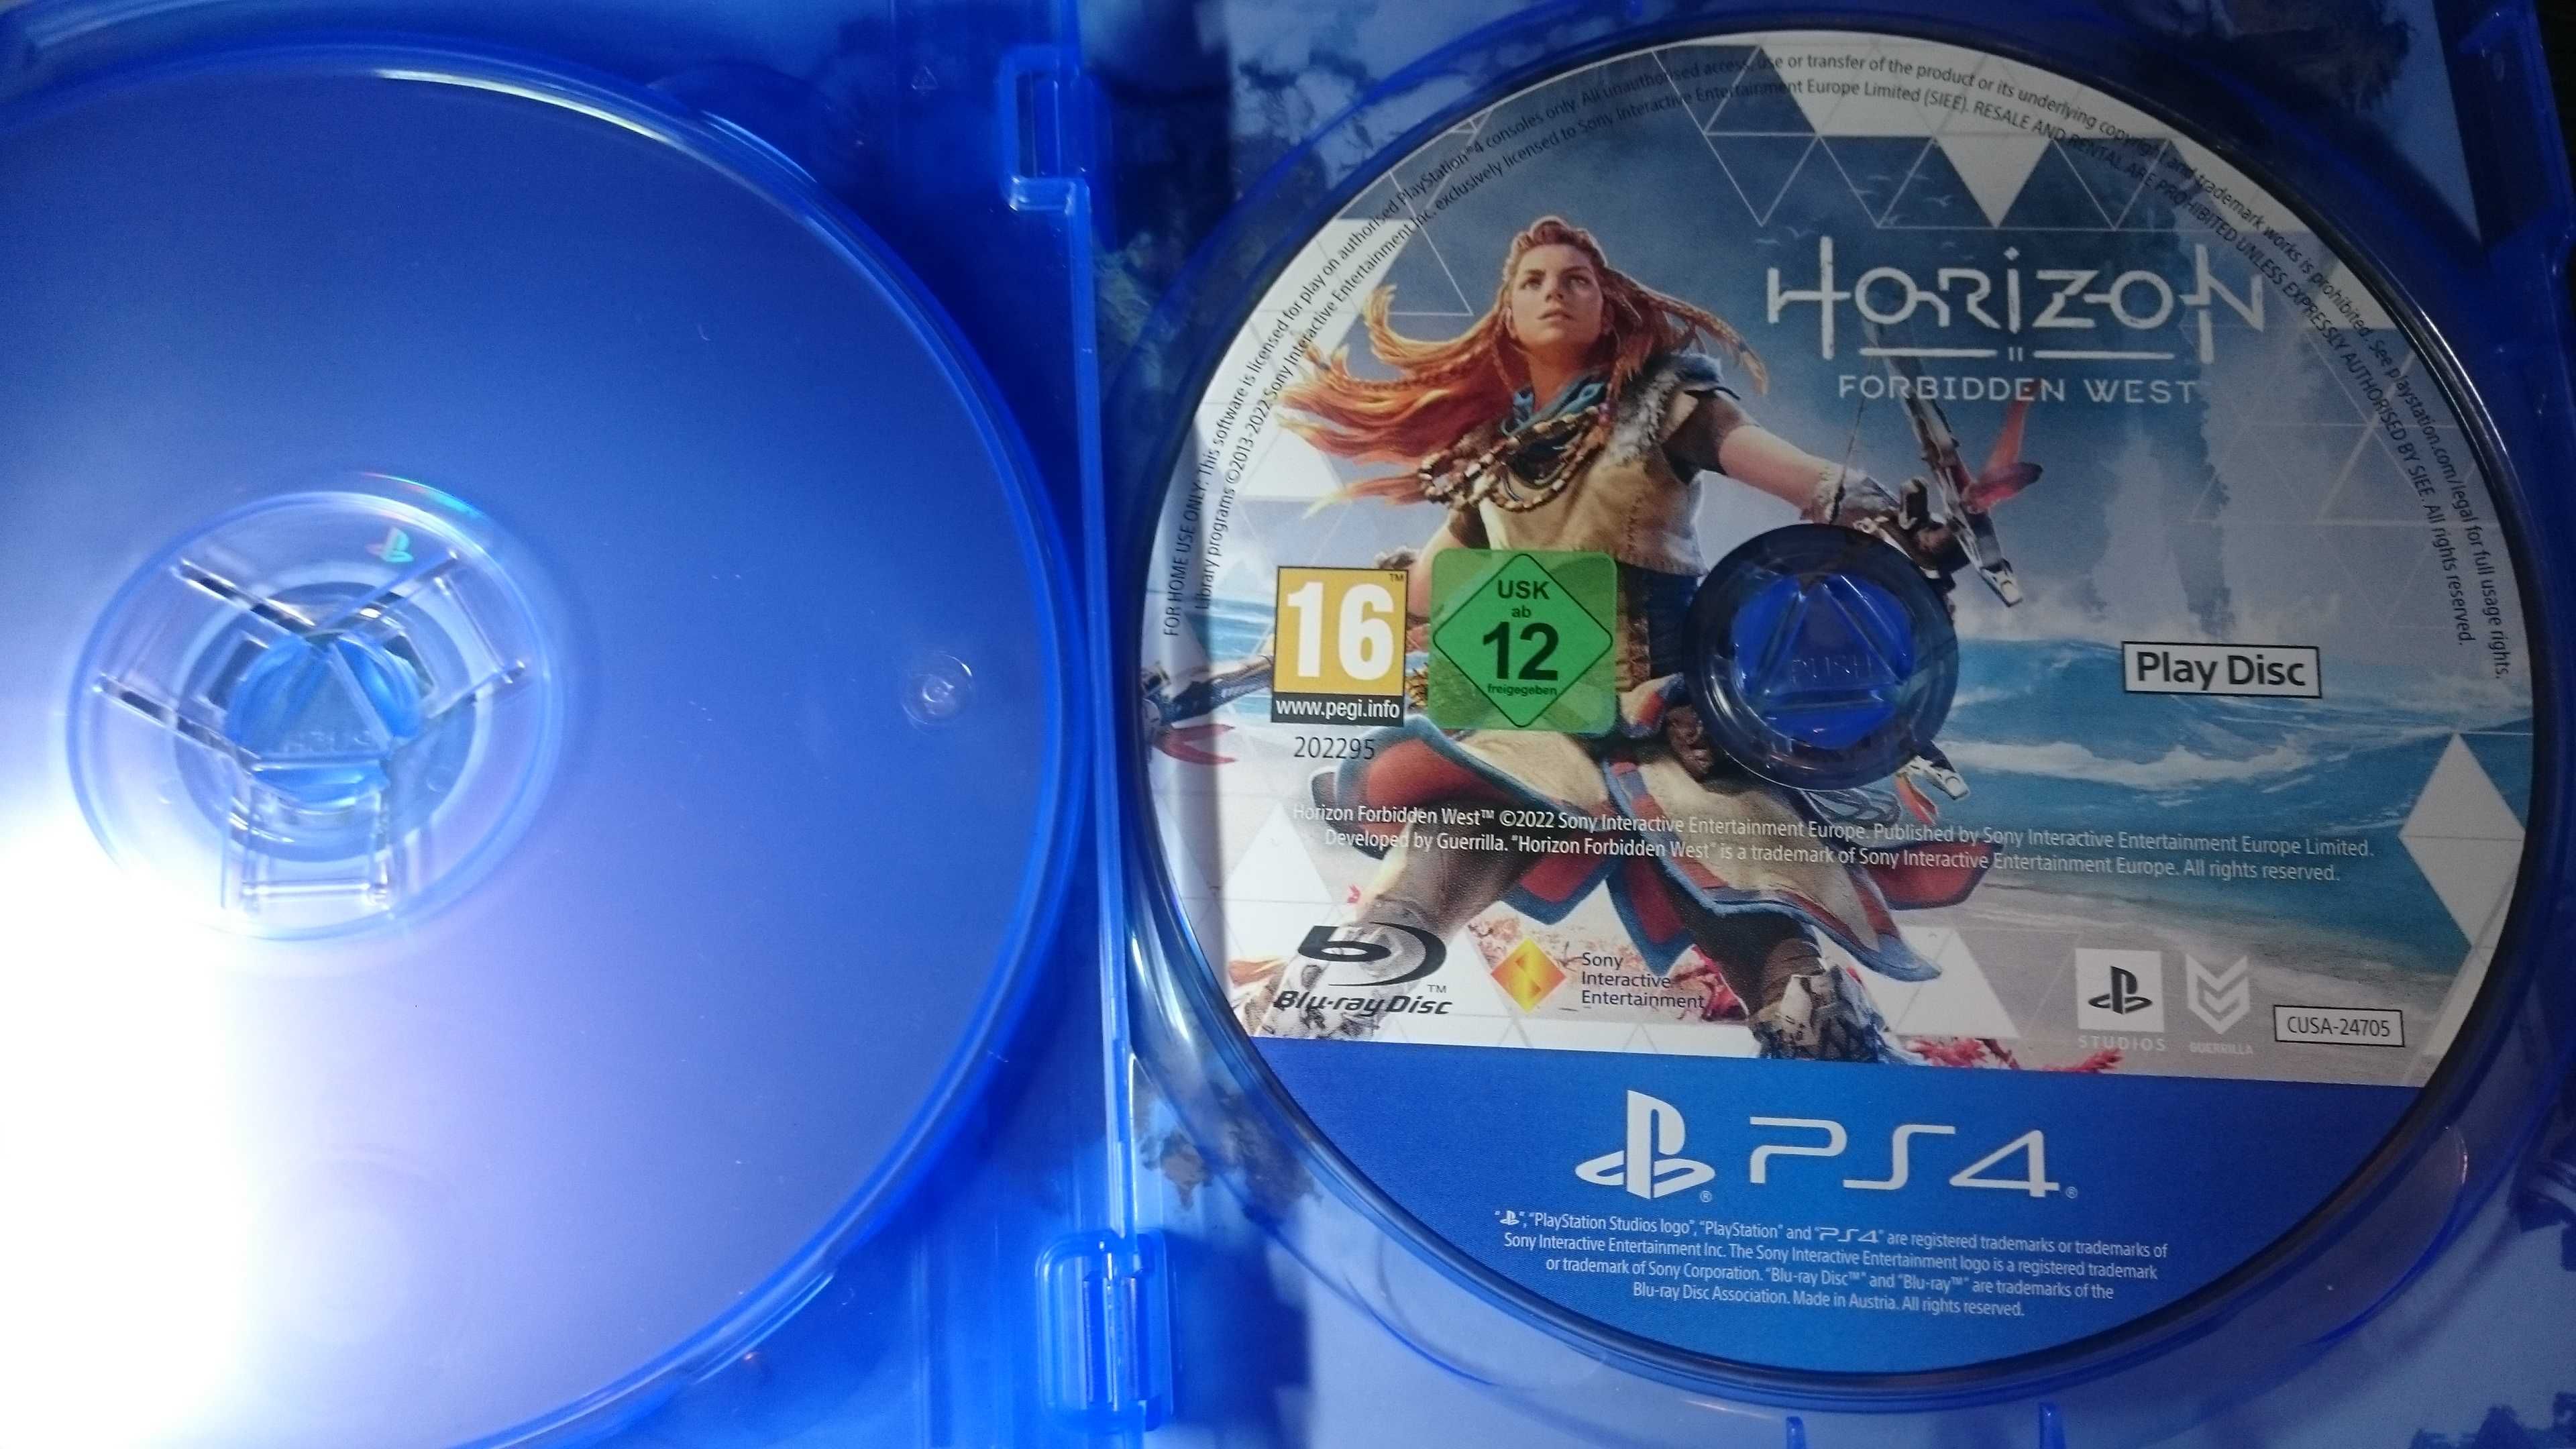 Horizon 2 II Forbidden West PS4  IDEAŁ Playstation Valhalla FC 6 GTA